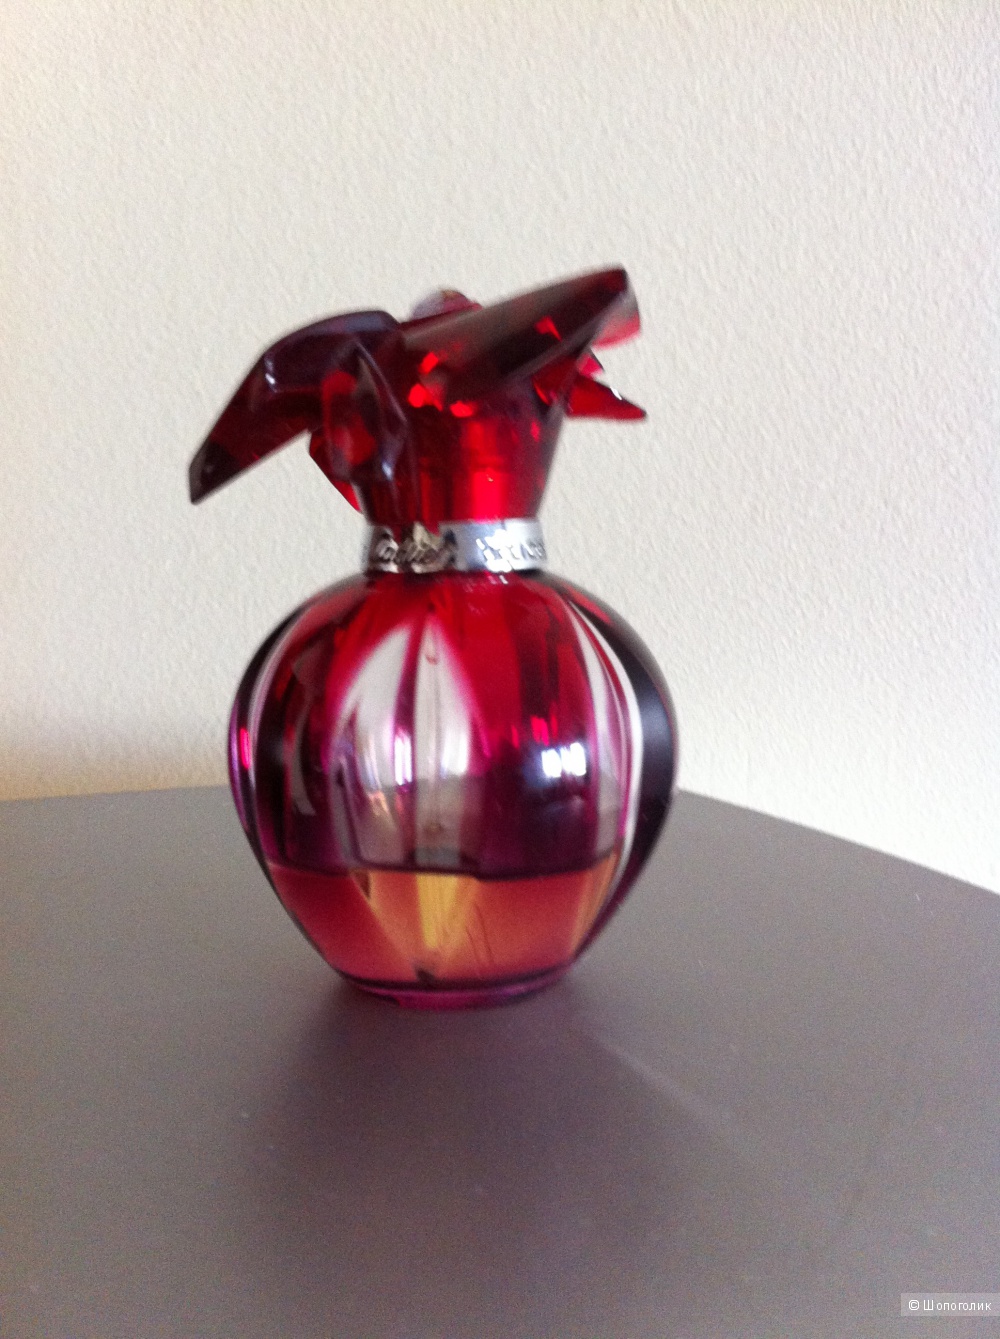 Delices De Cartier Eau de Parfum 30 ml для женщин